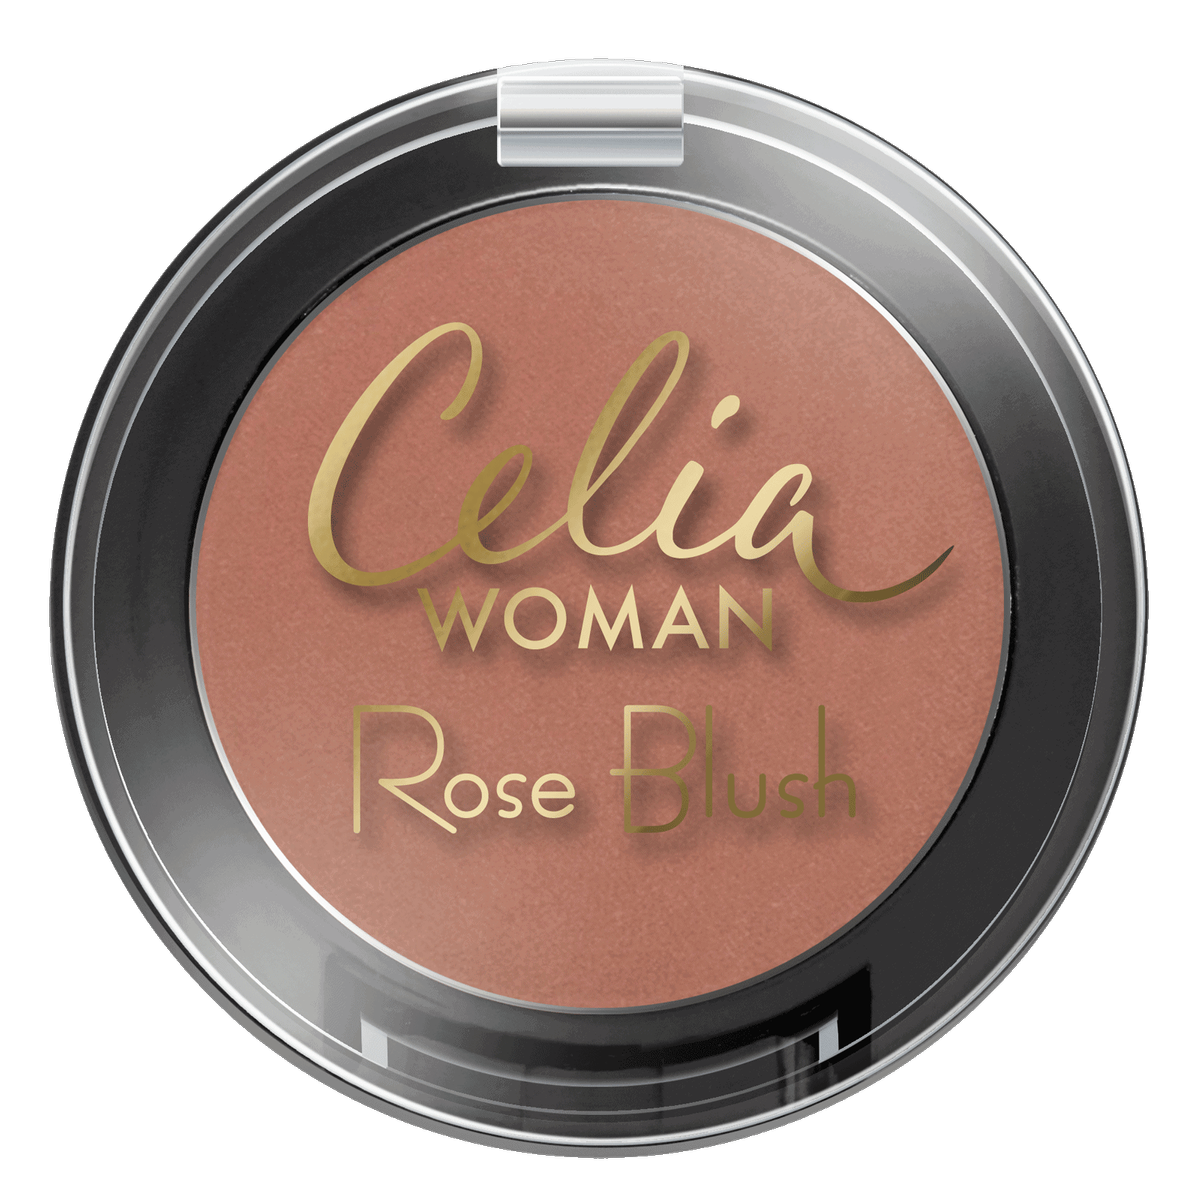 Celia Woman róż 06